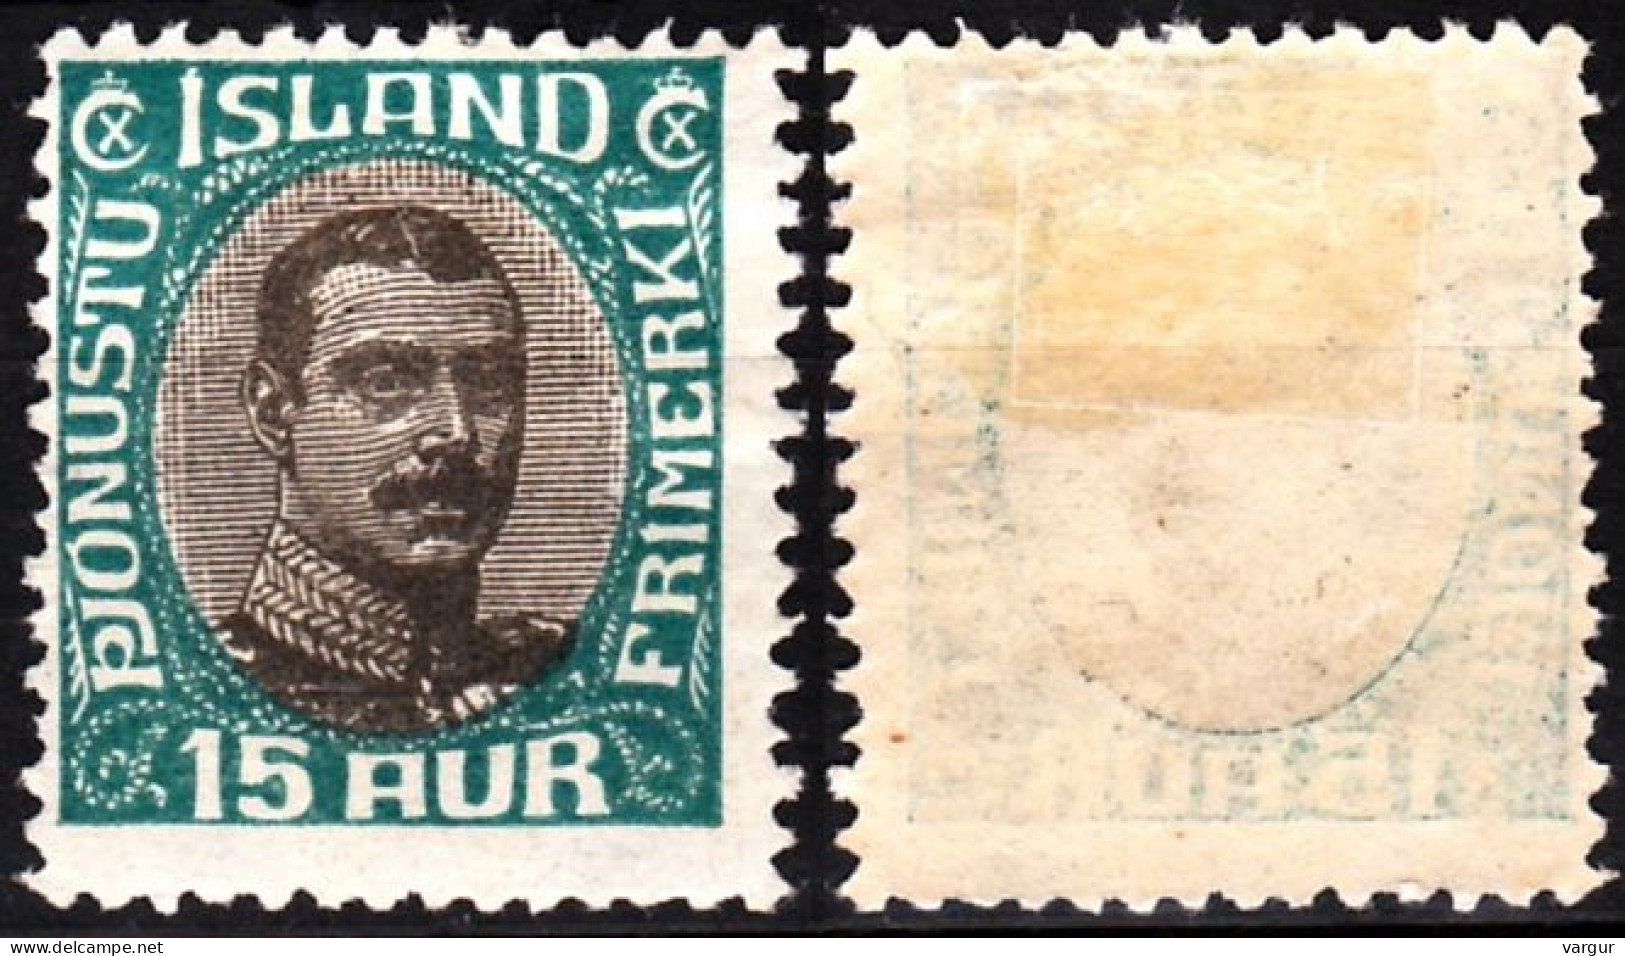 ICELAND / ISLAND Postage Due 1920 King Christian X, 15Aur, MH - Officials